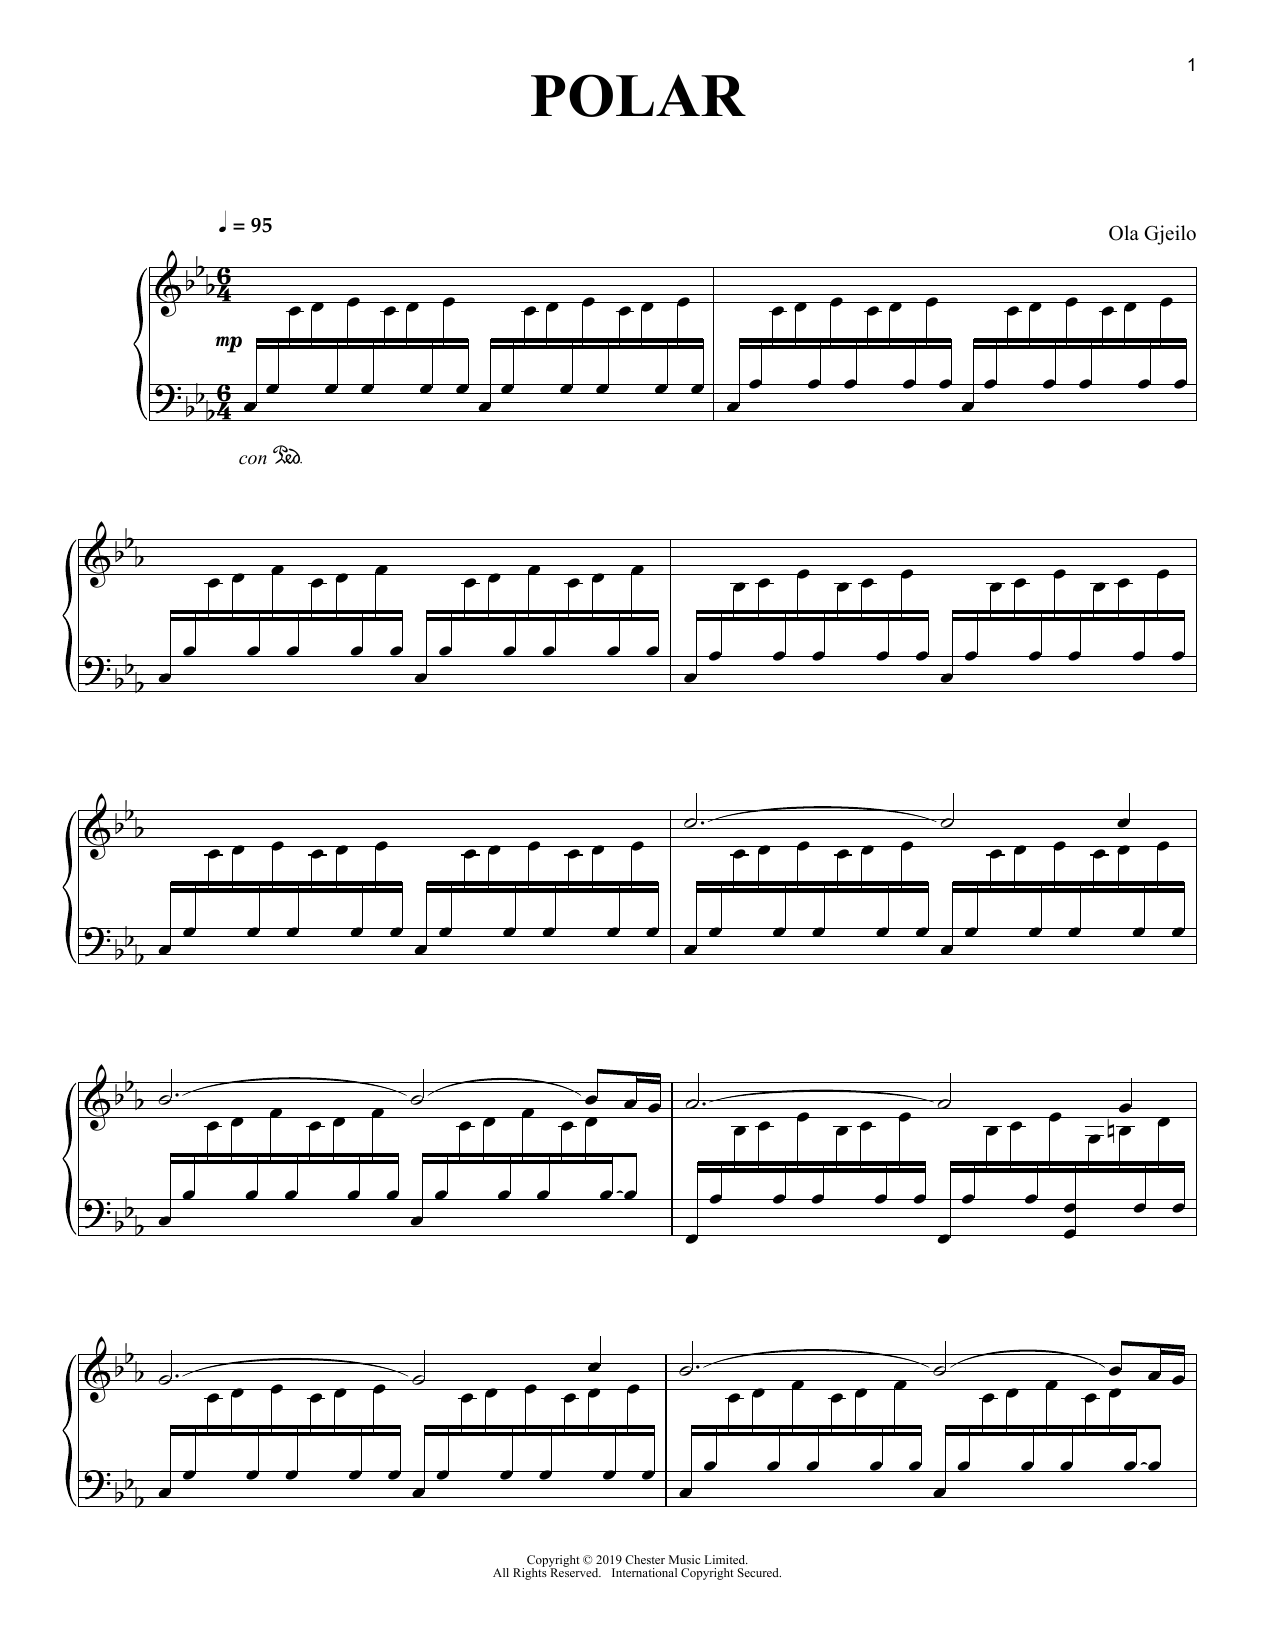 Ola Gjeilo Polar Sheet Music Notes & Chords for Piano Solo - Download or Print PDF